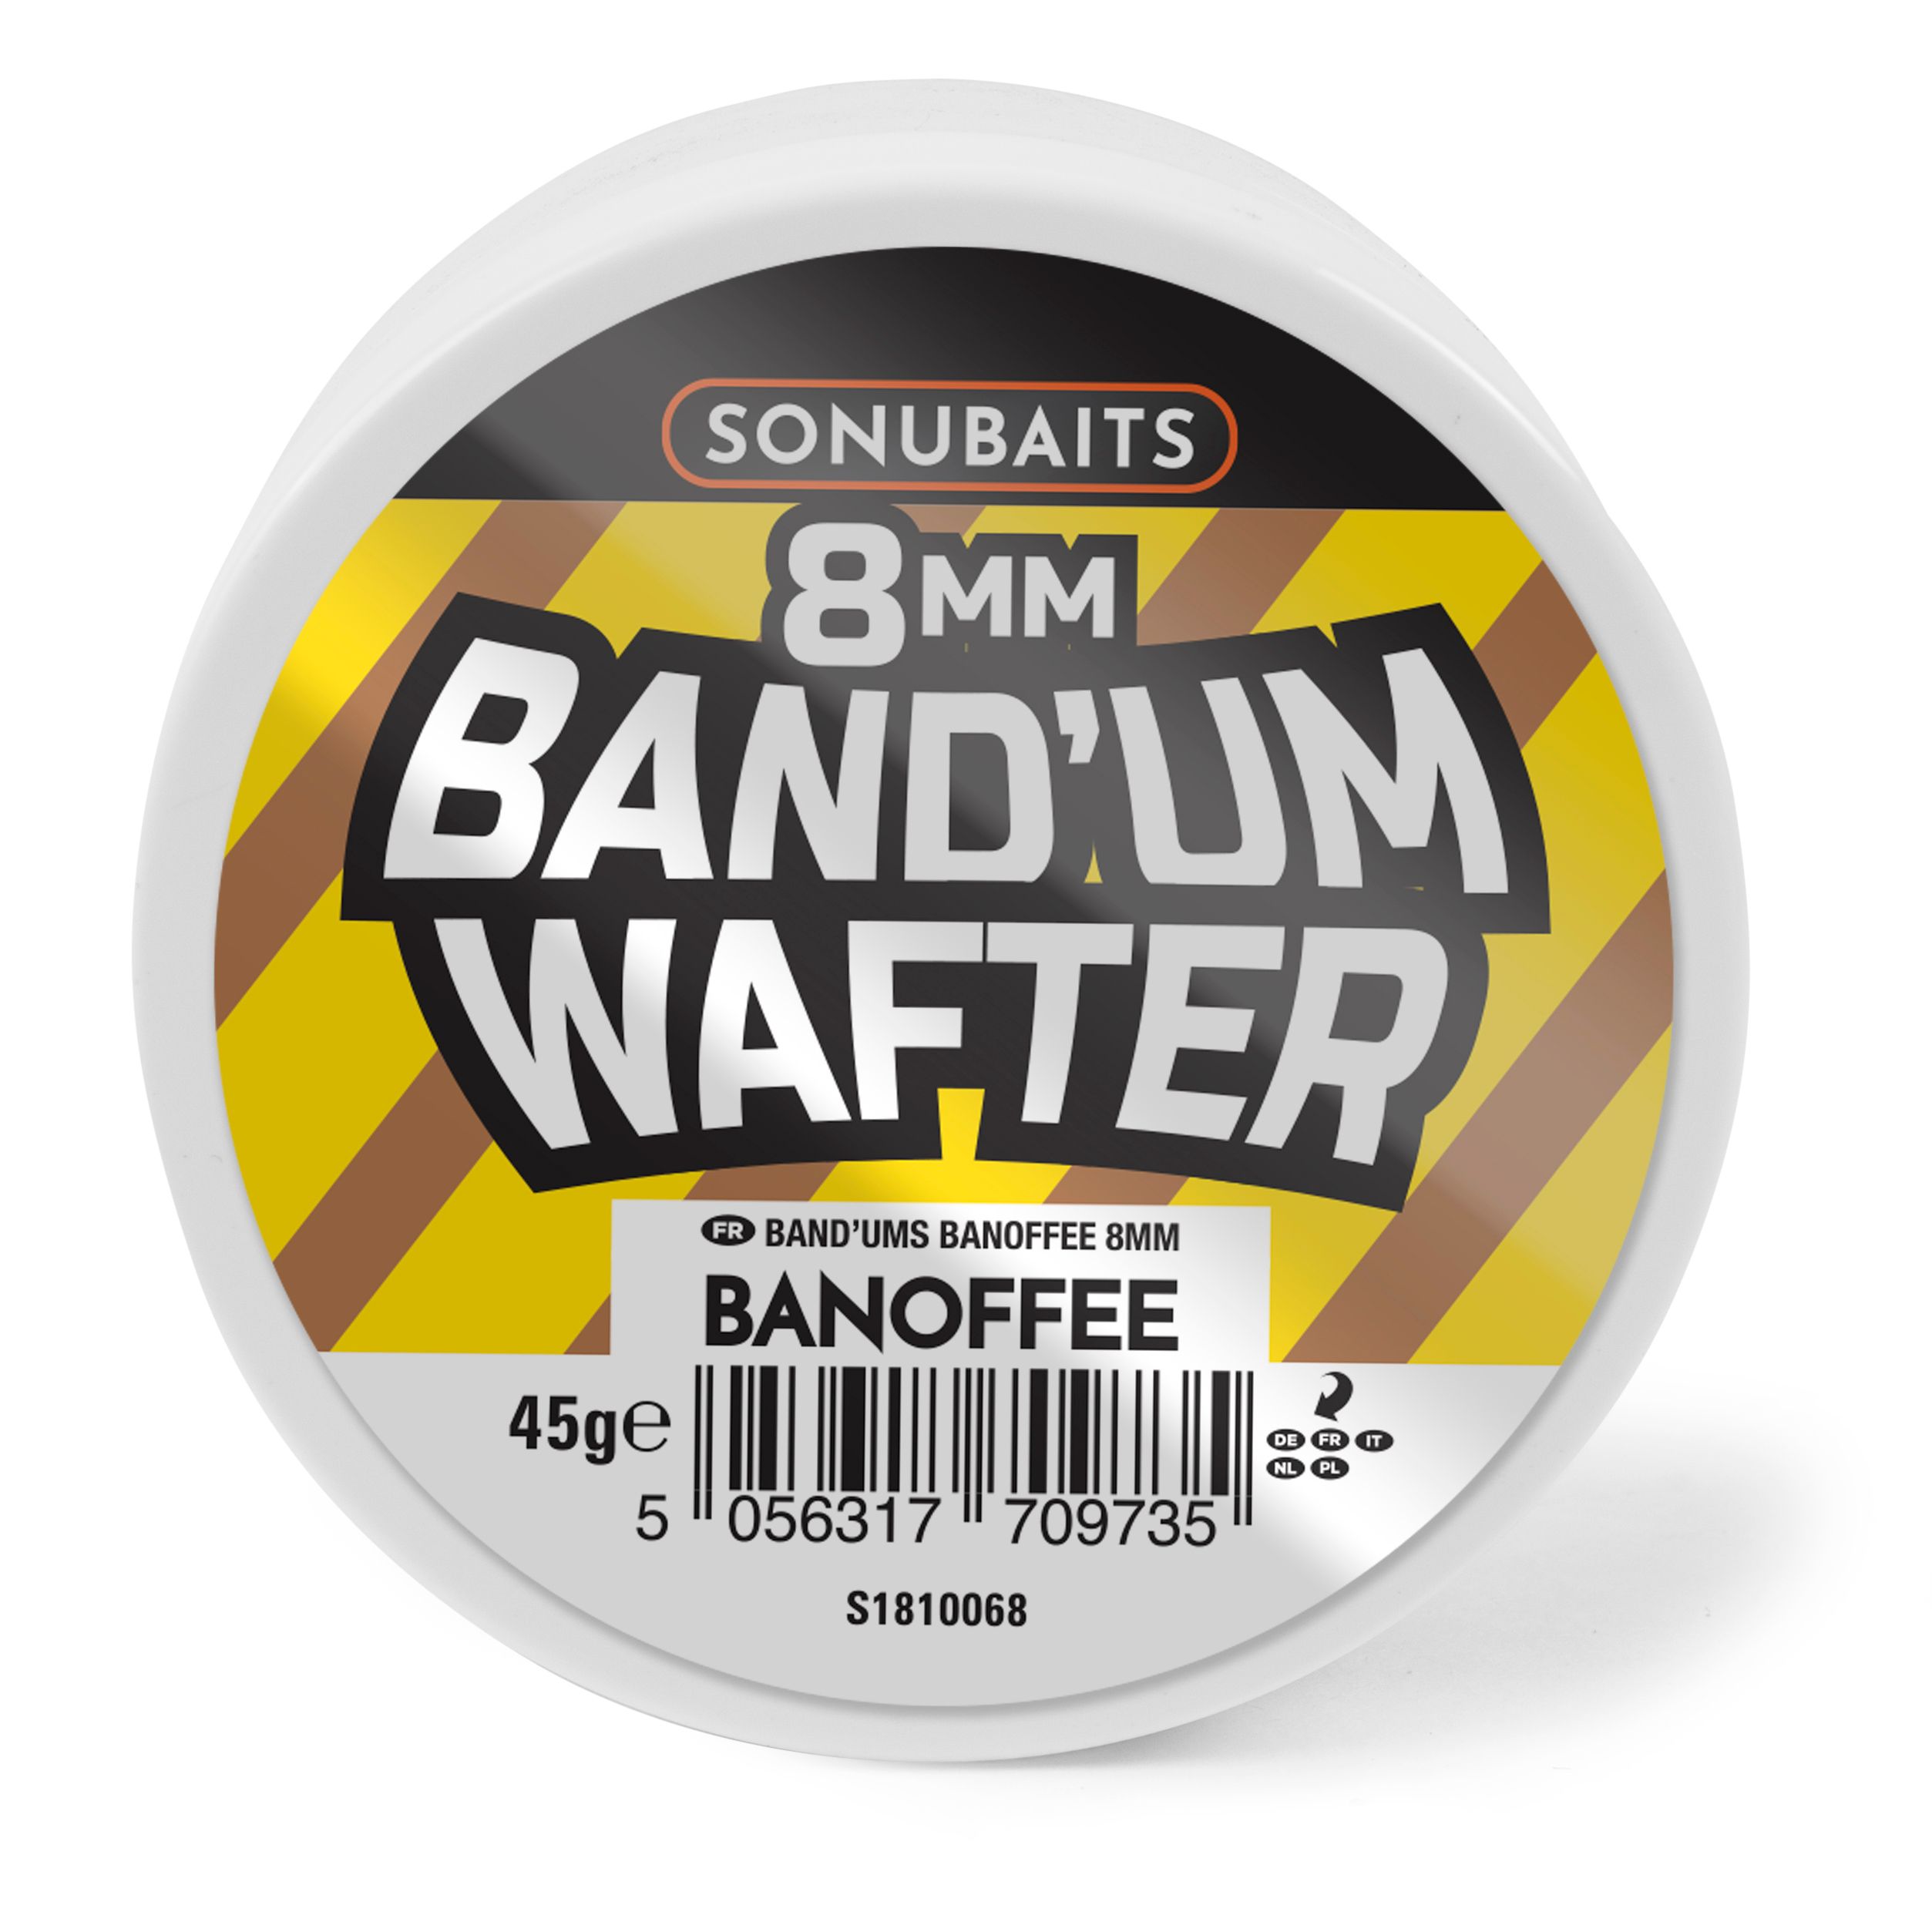 Sonubaits Band'um Wafters 8mm - Banoffee